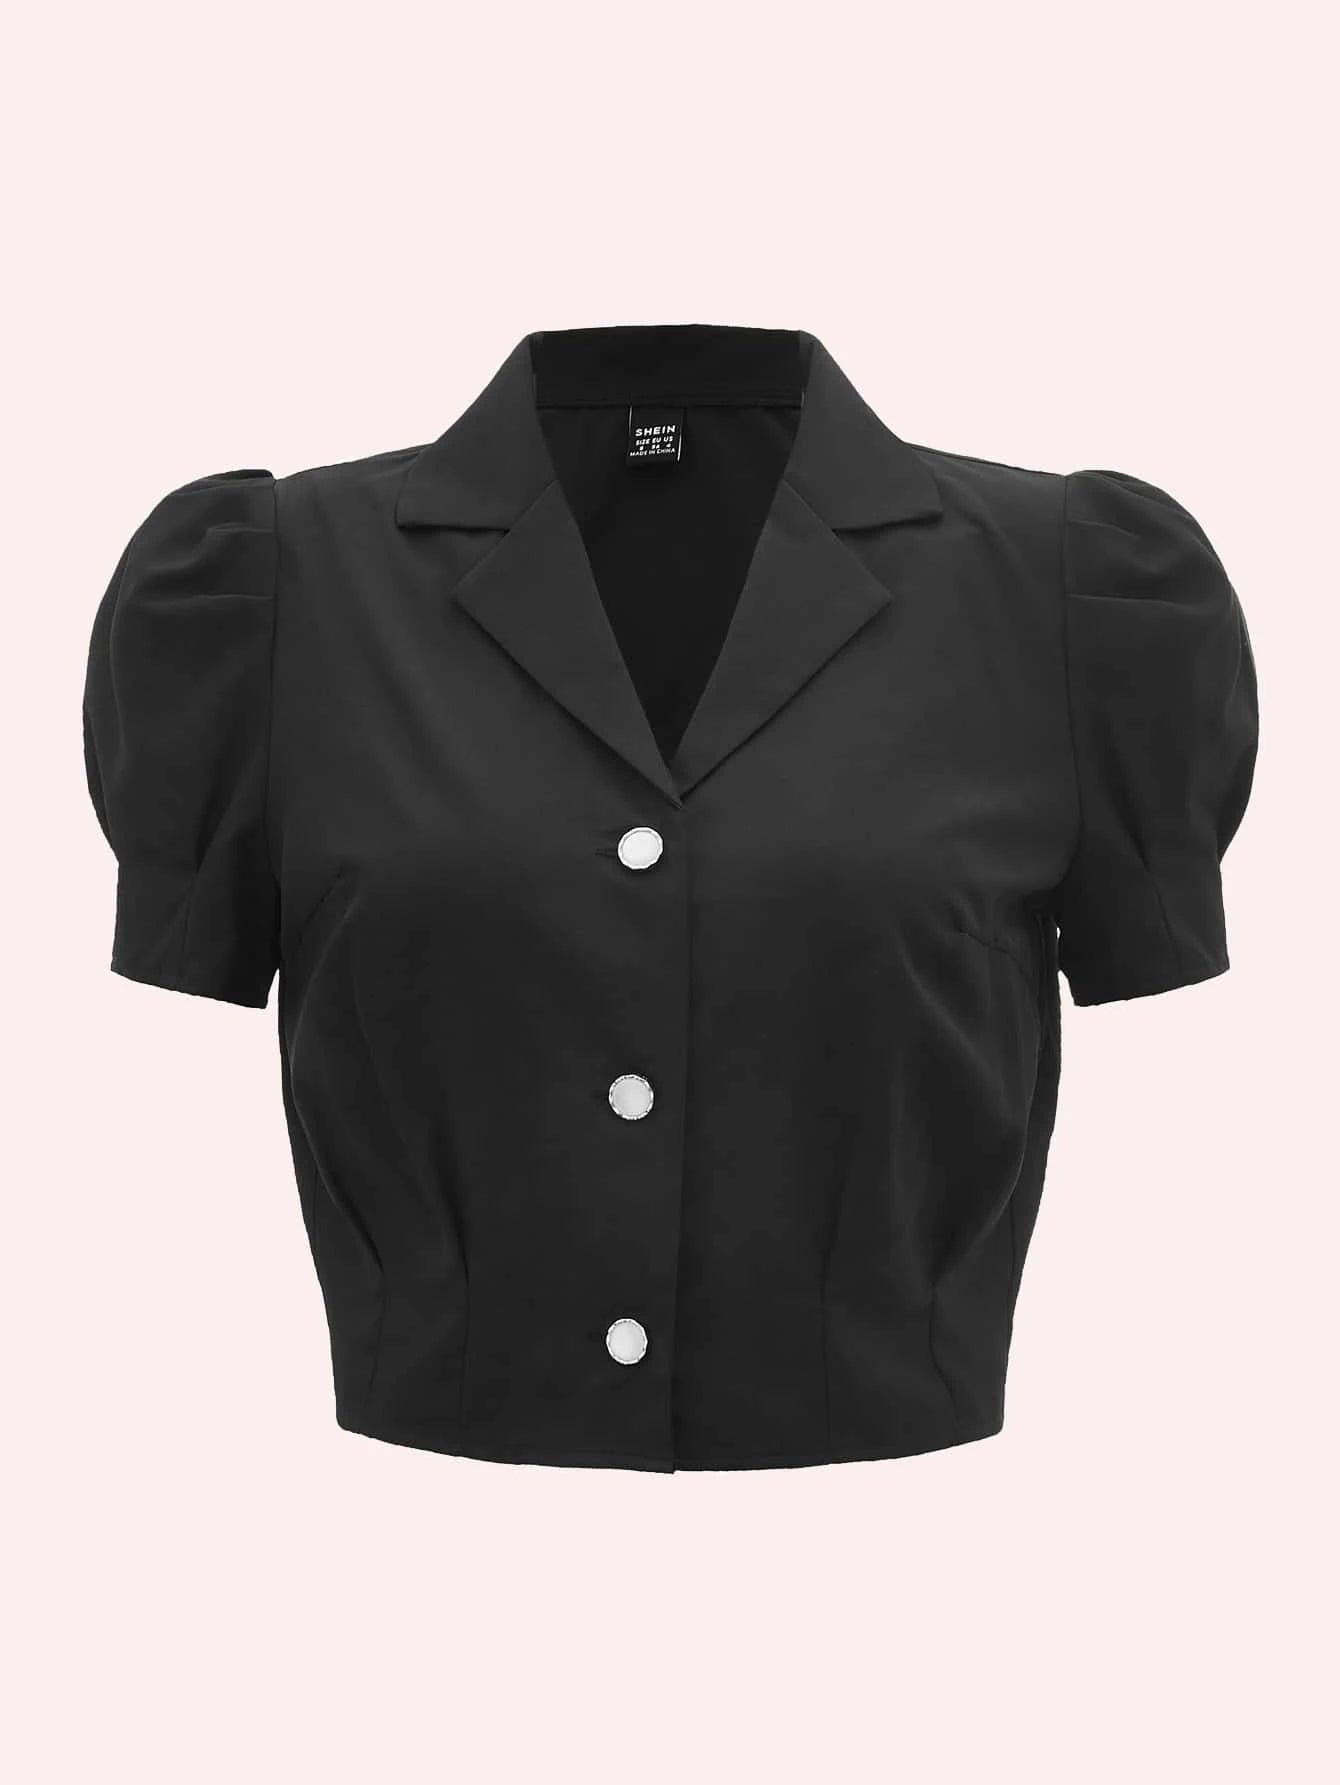  | SHEIN MOD Lapel Collar Puff Sleeve Button Up Blouse | Blouse | Shein | OneHub